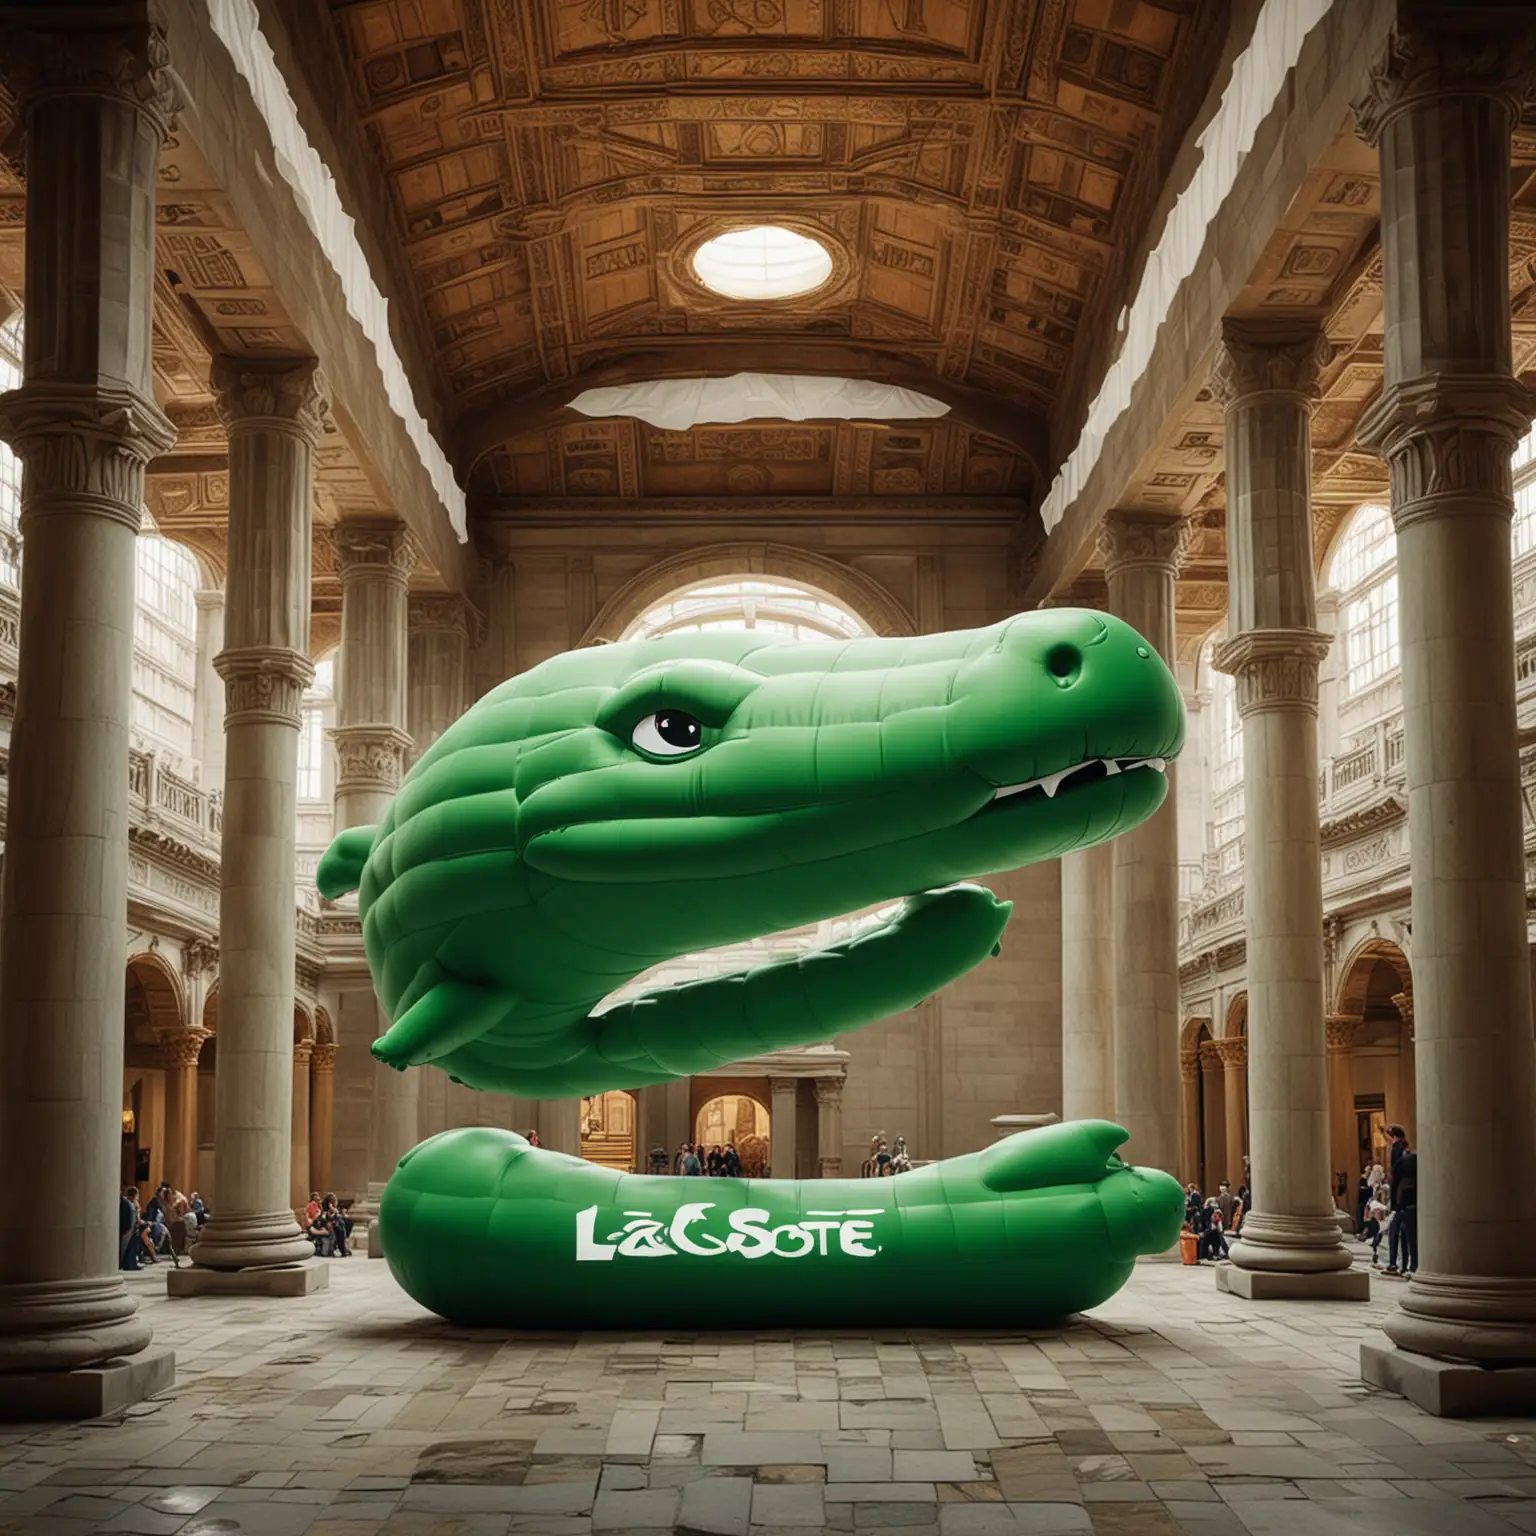 Surreal Renaissance Scene Massive Inflatable Lacoste Logo in Temple